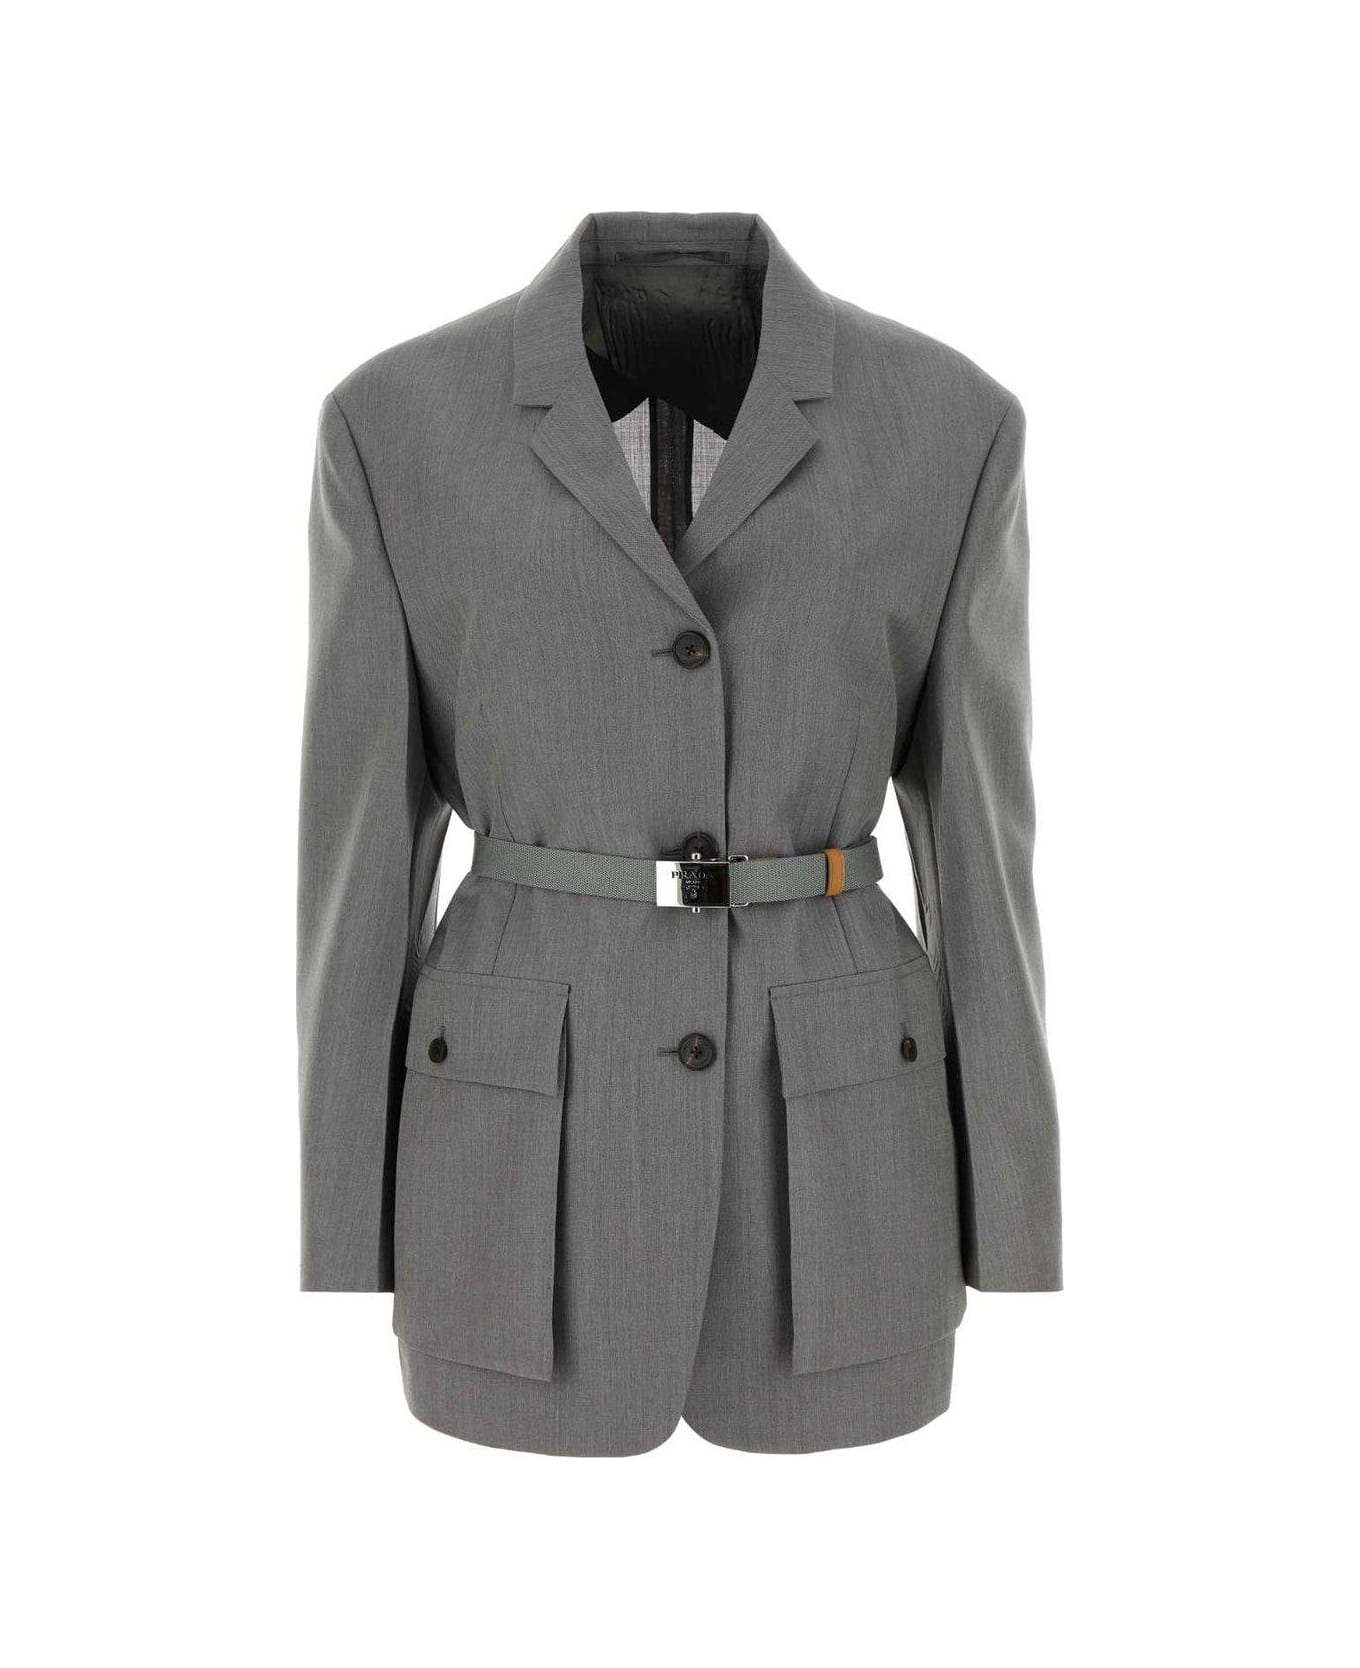 Prada Button-up Belted Jacket - Grey